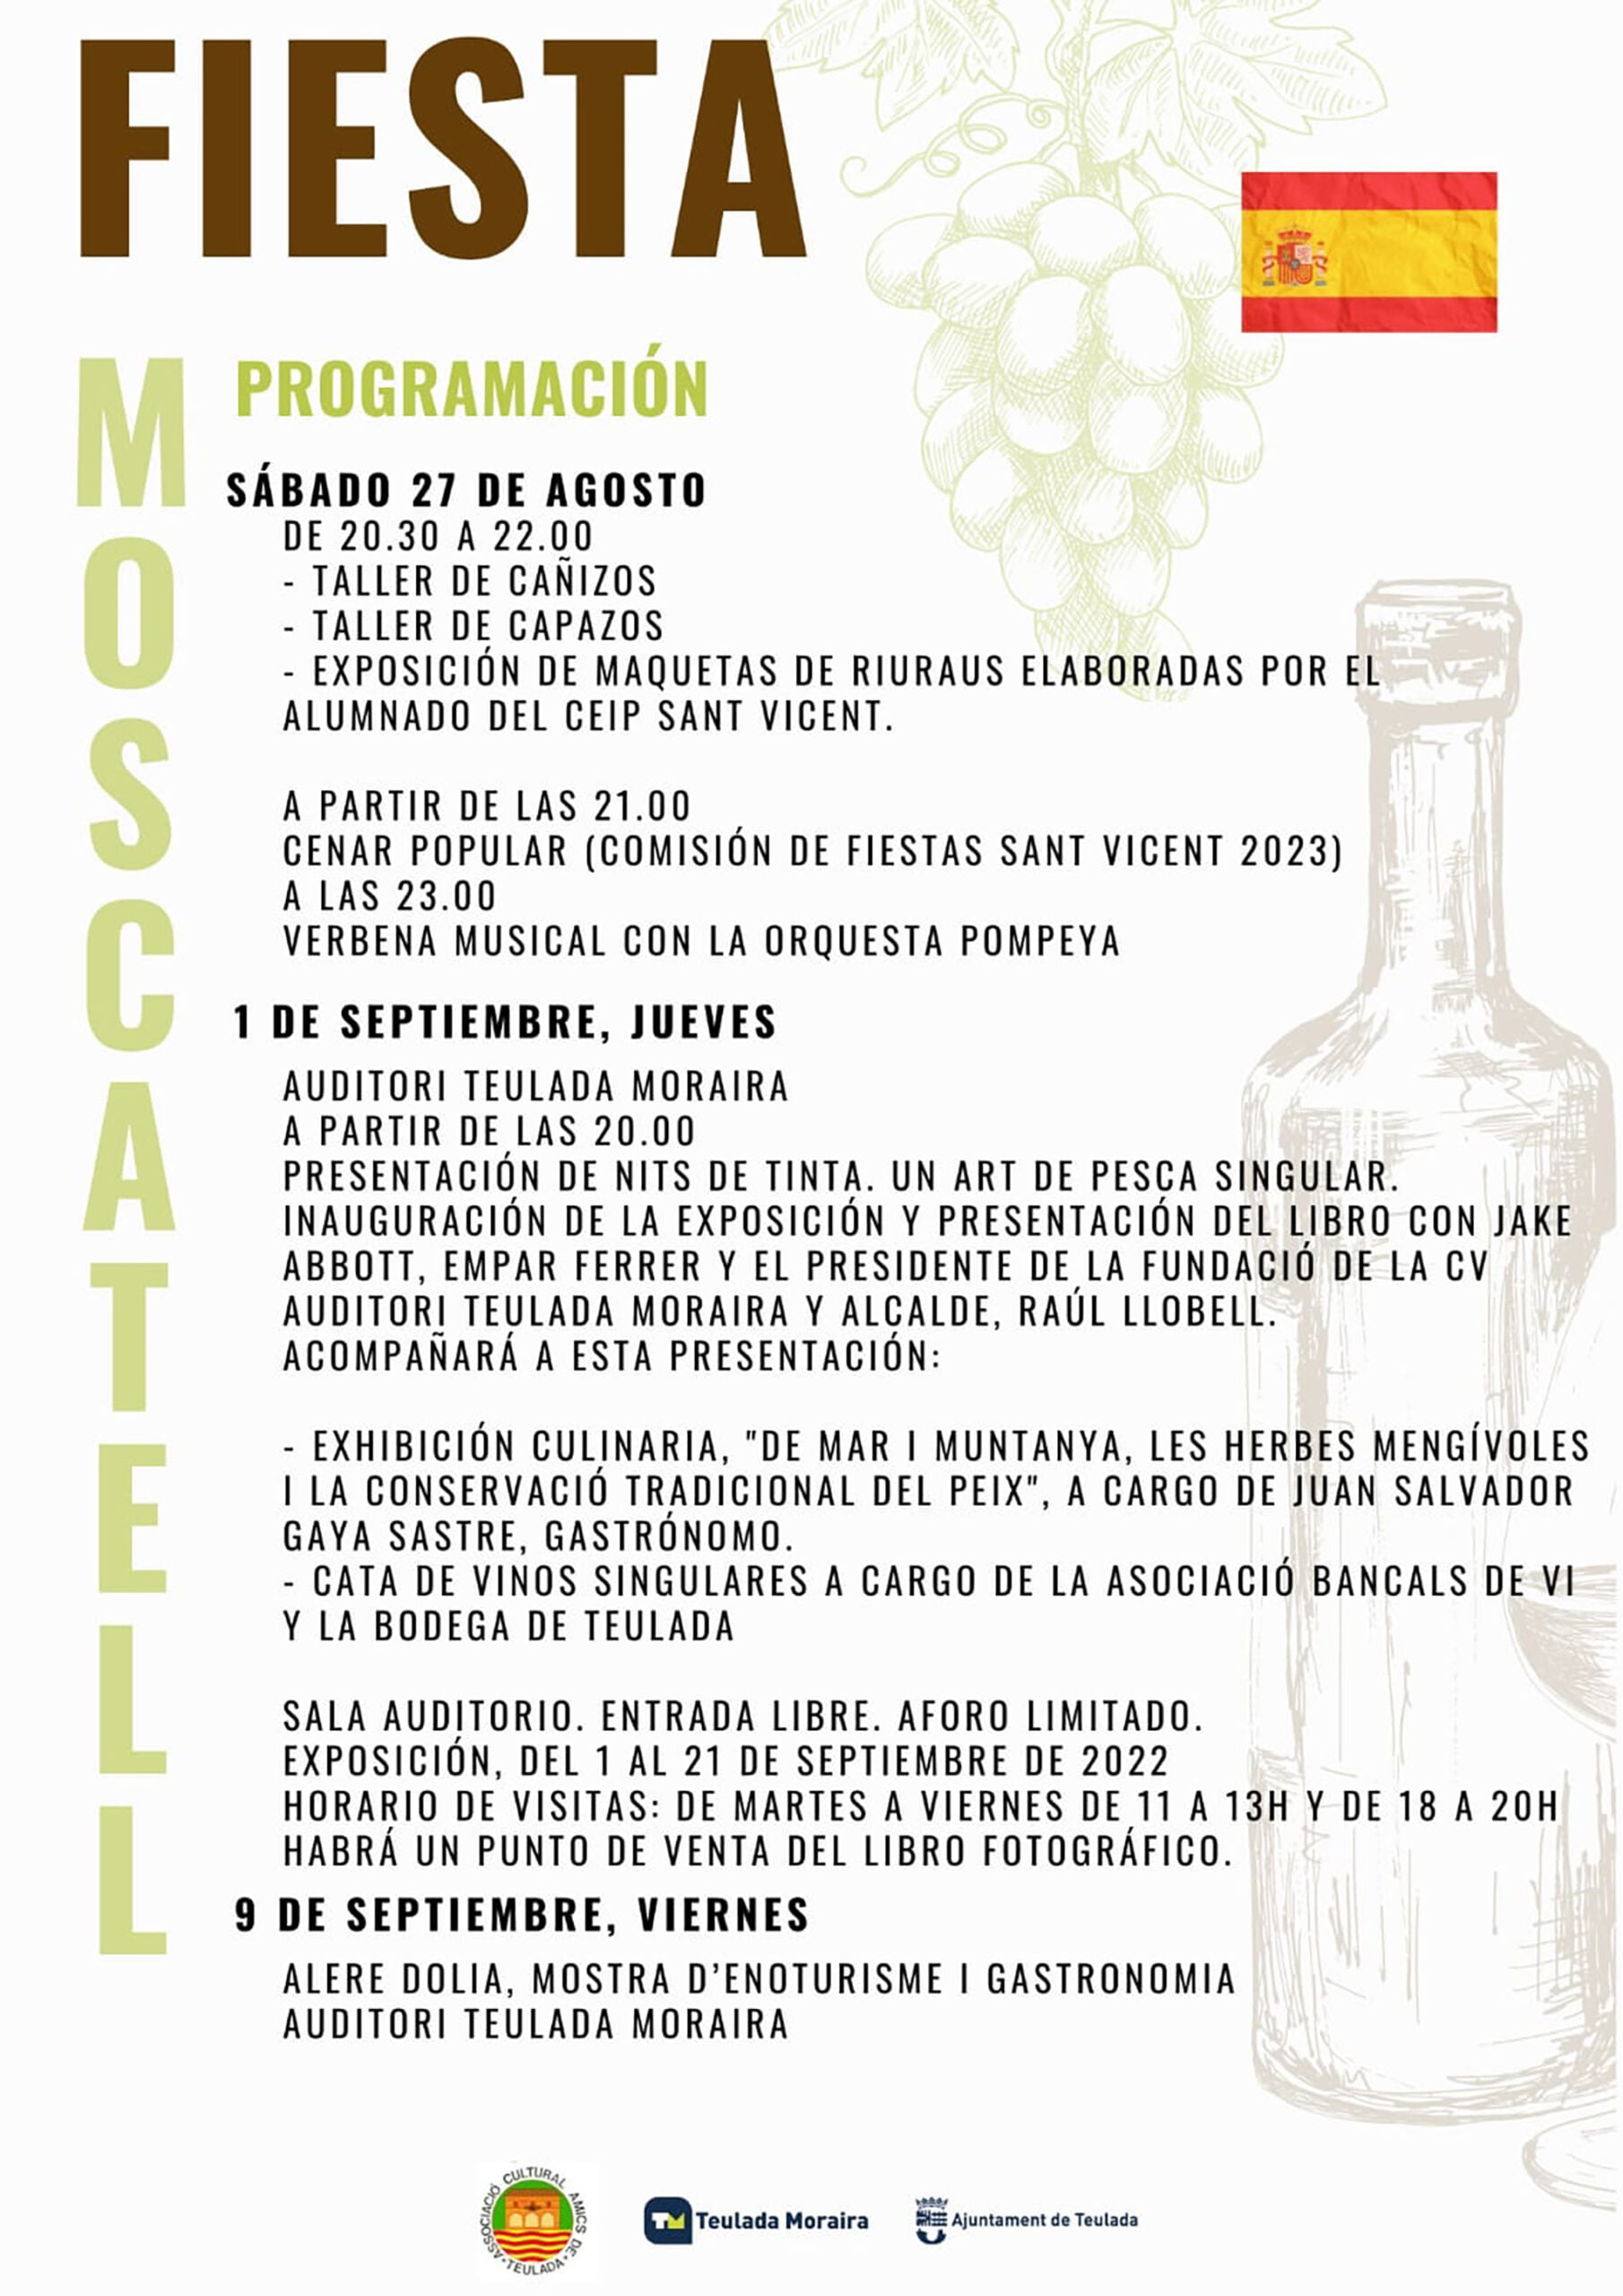 Segunda parte del programa de la Festa del Moscatell de Teulada-Moraira 2022 (Castellano)